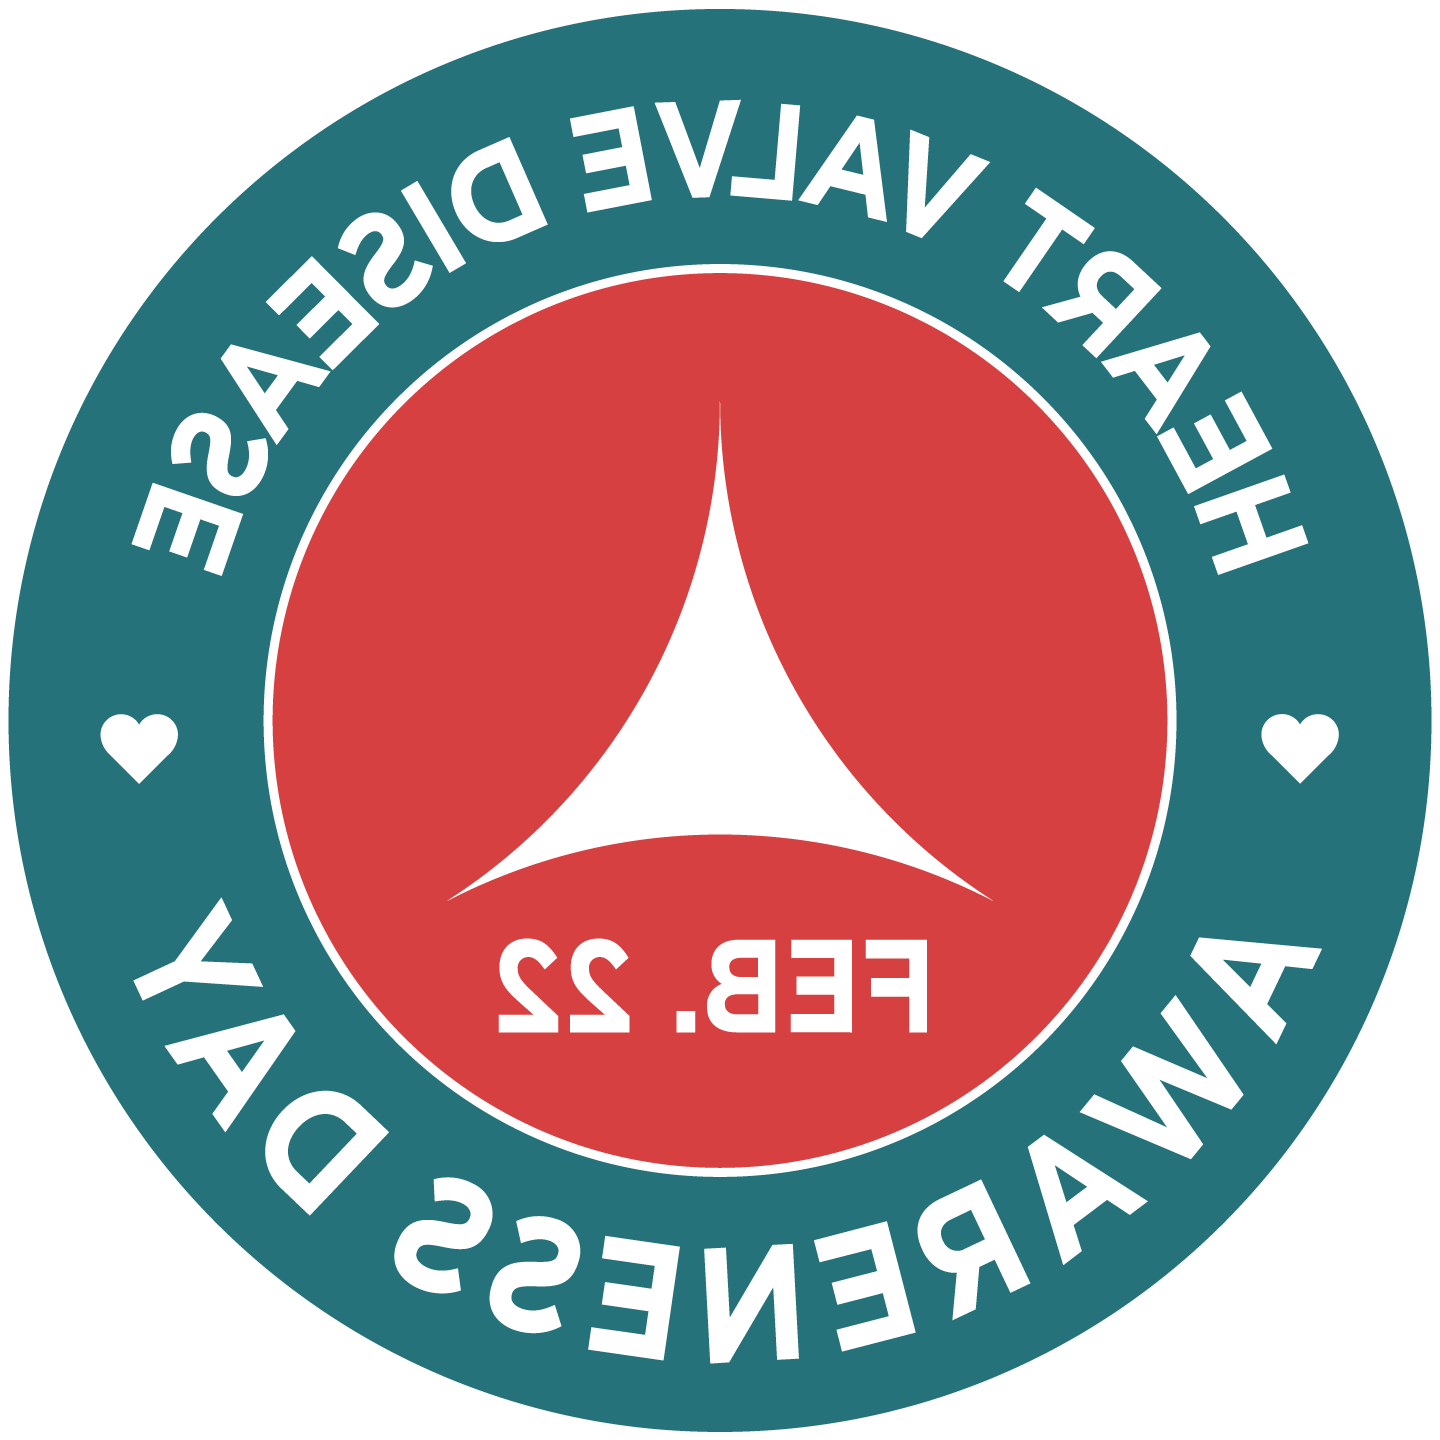 Feb 22 is Heart Valve Disease Awareness Day logo